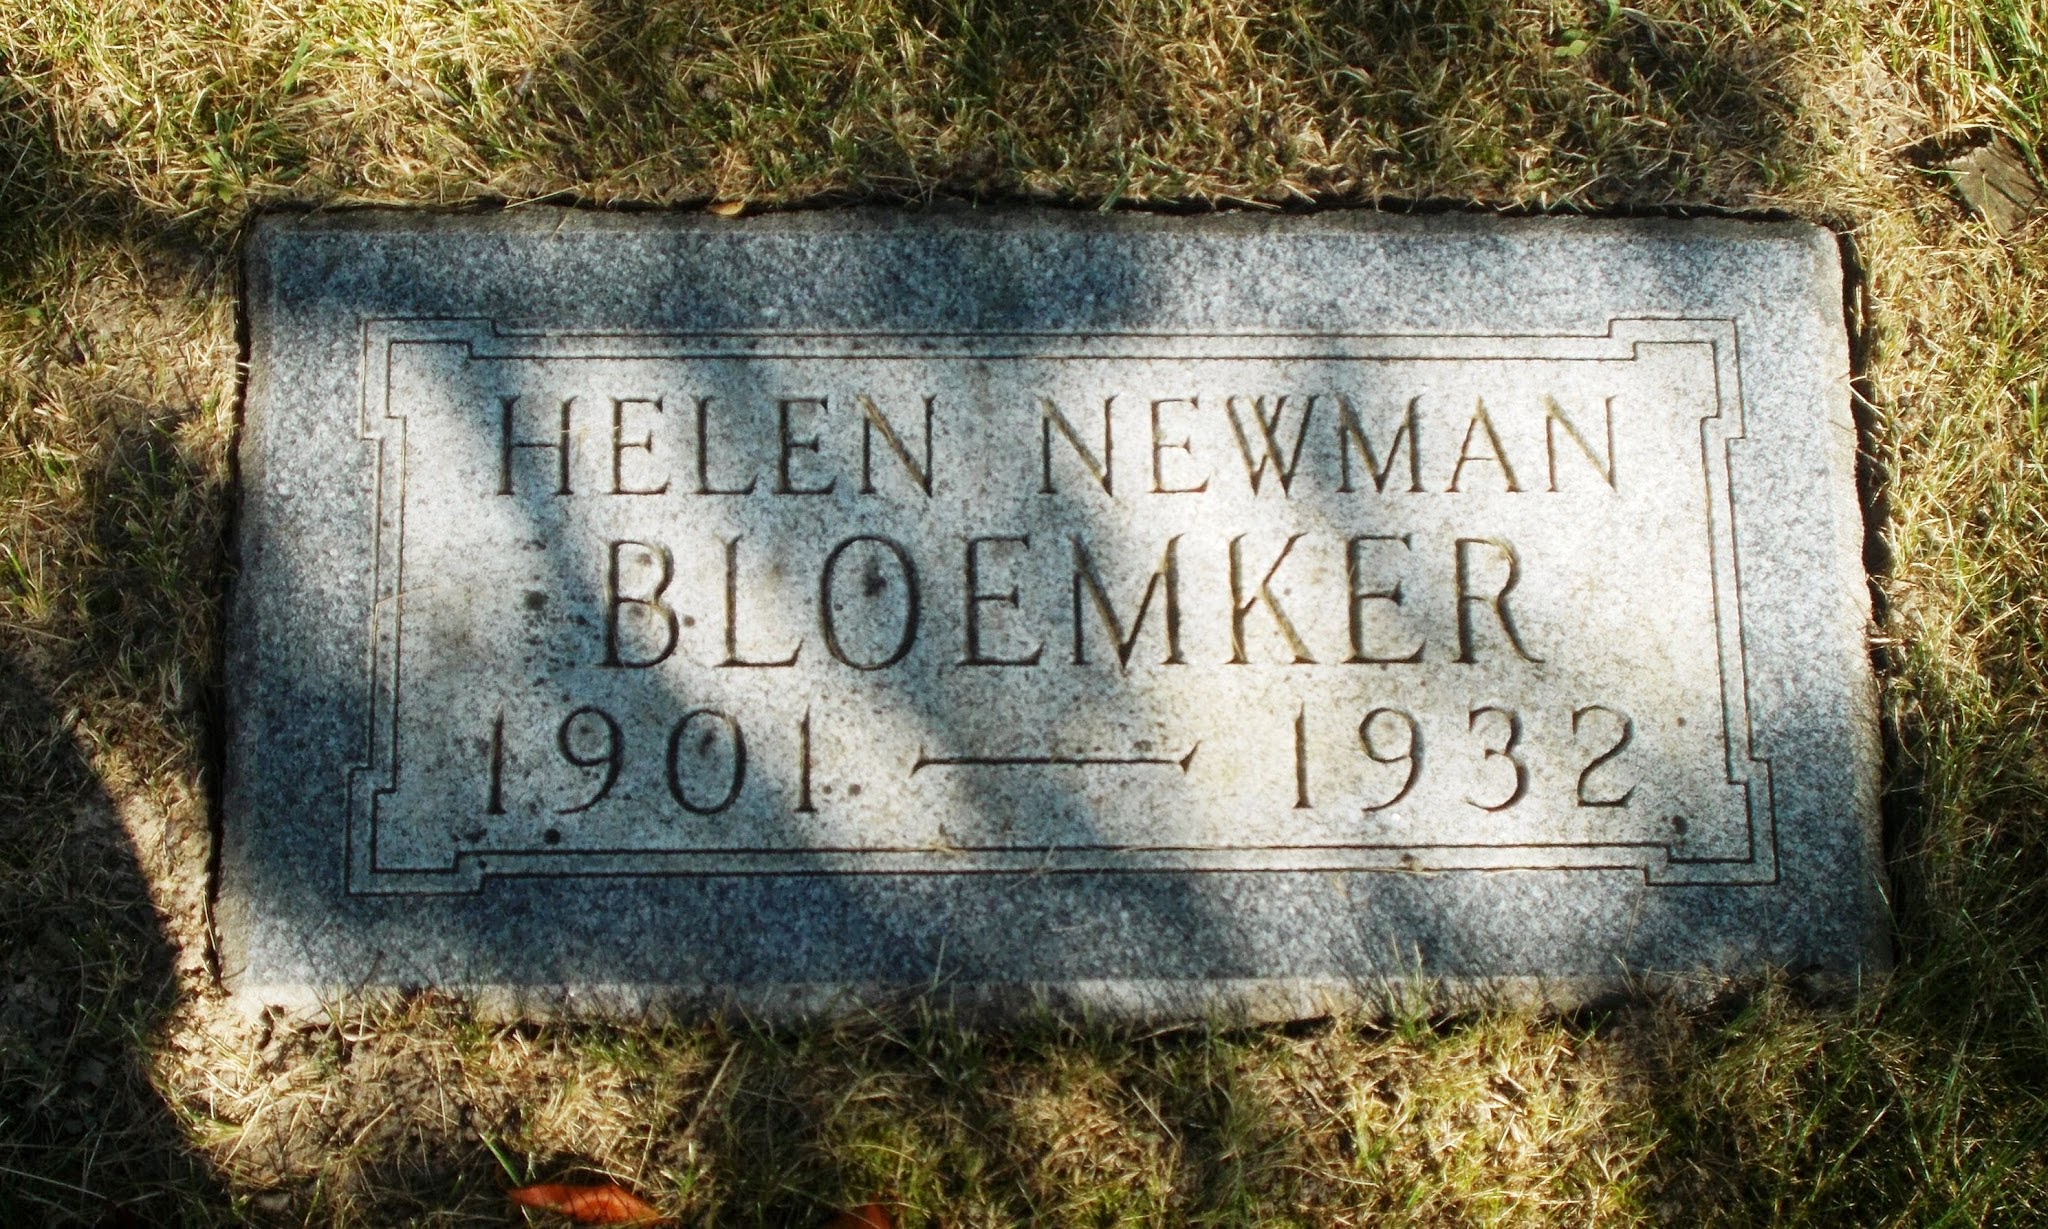 Helen Newman Bloemker